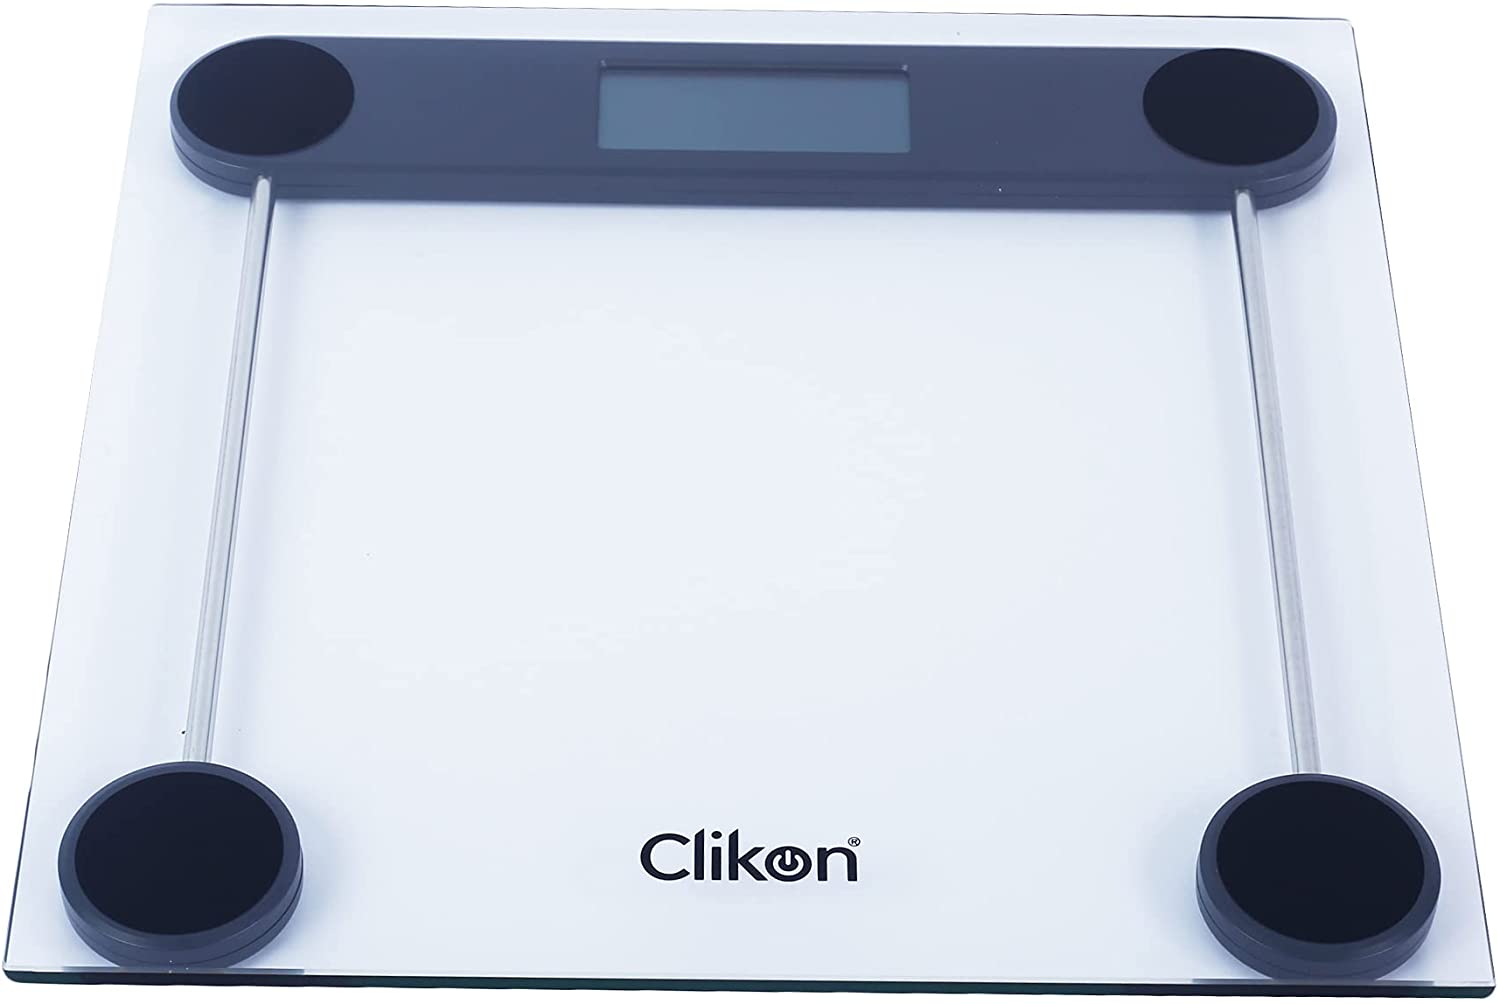 Clikon Digital Bathroom Scale